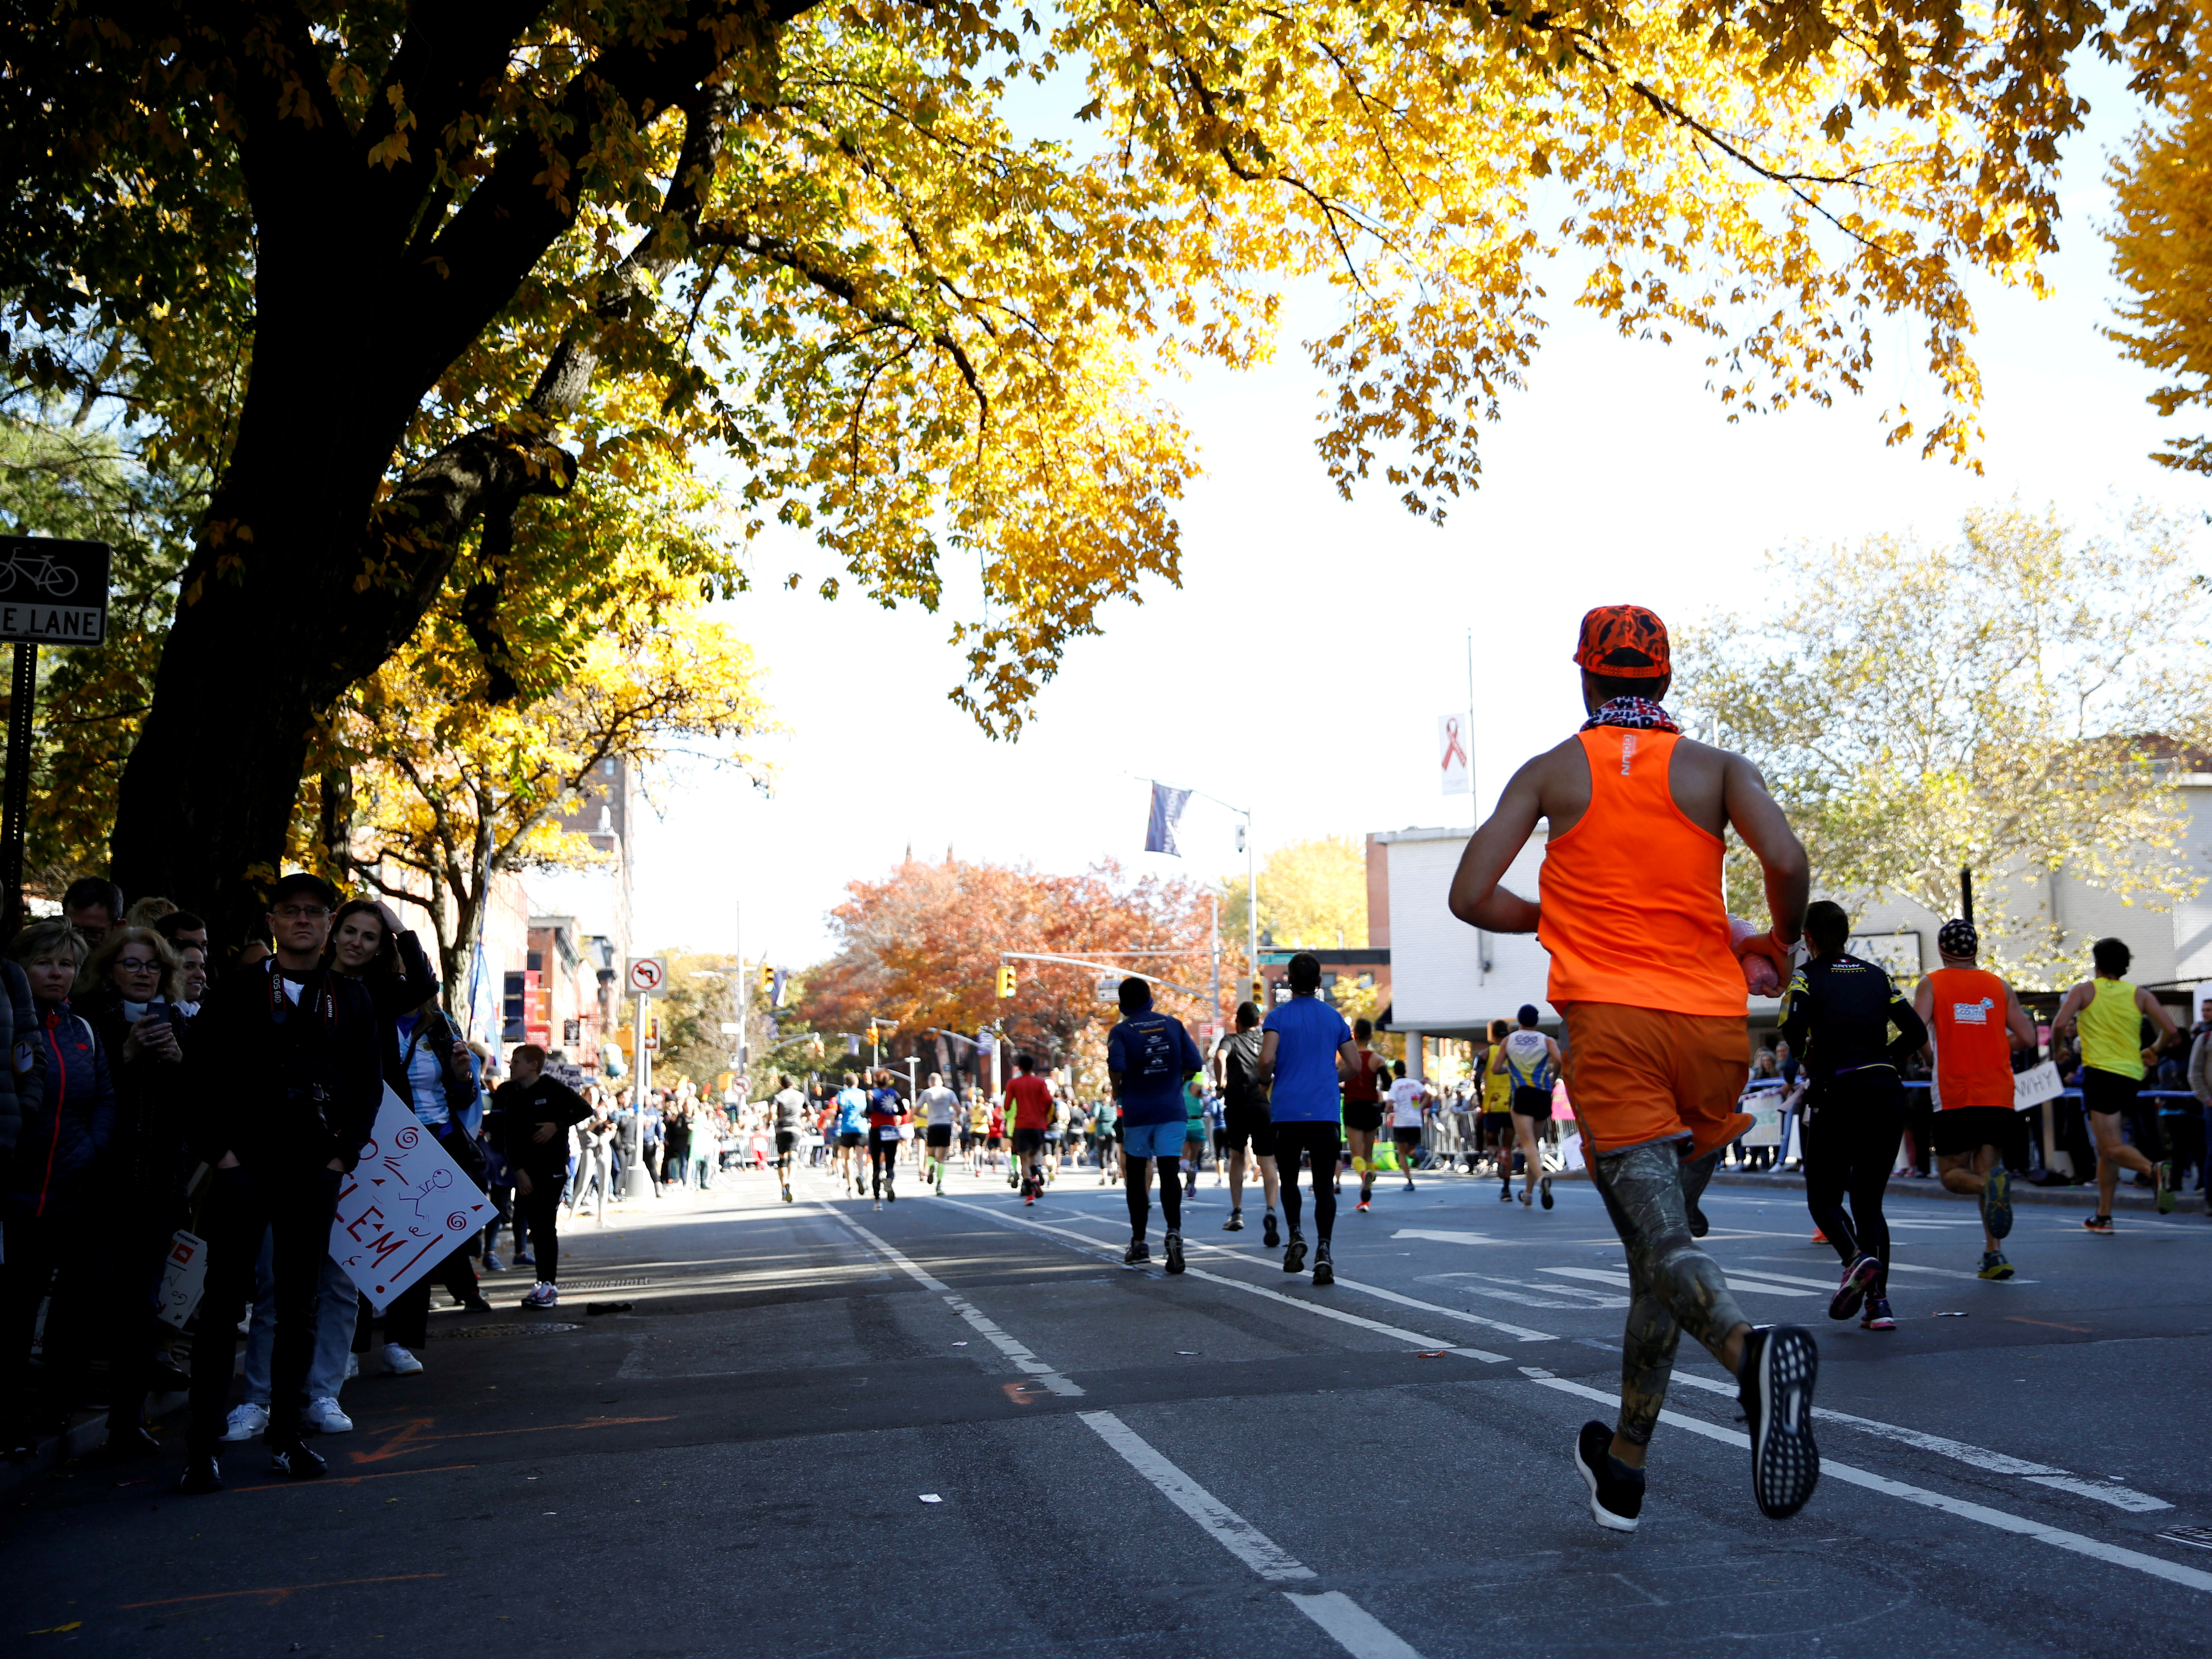 FILE PHOTO: Runners race during the 2018 New York City Marathon in the Brooklyn borough of New York City, New York, U.S., November 4, 2018. REUTERS/Caitlin Ochs/File Photo